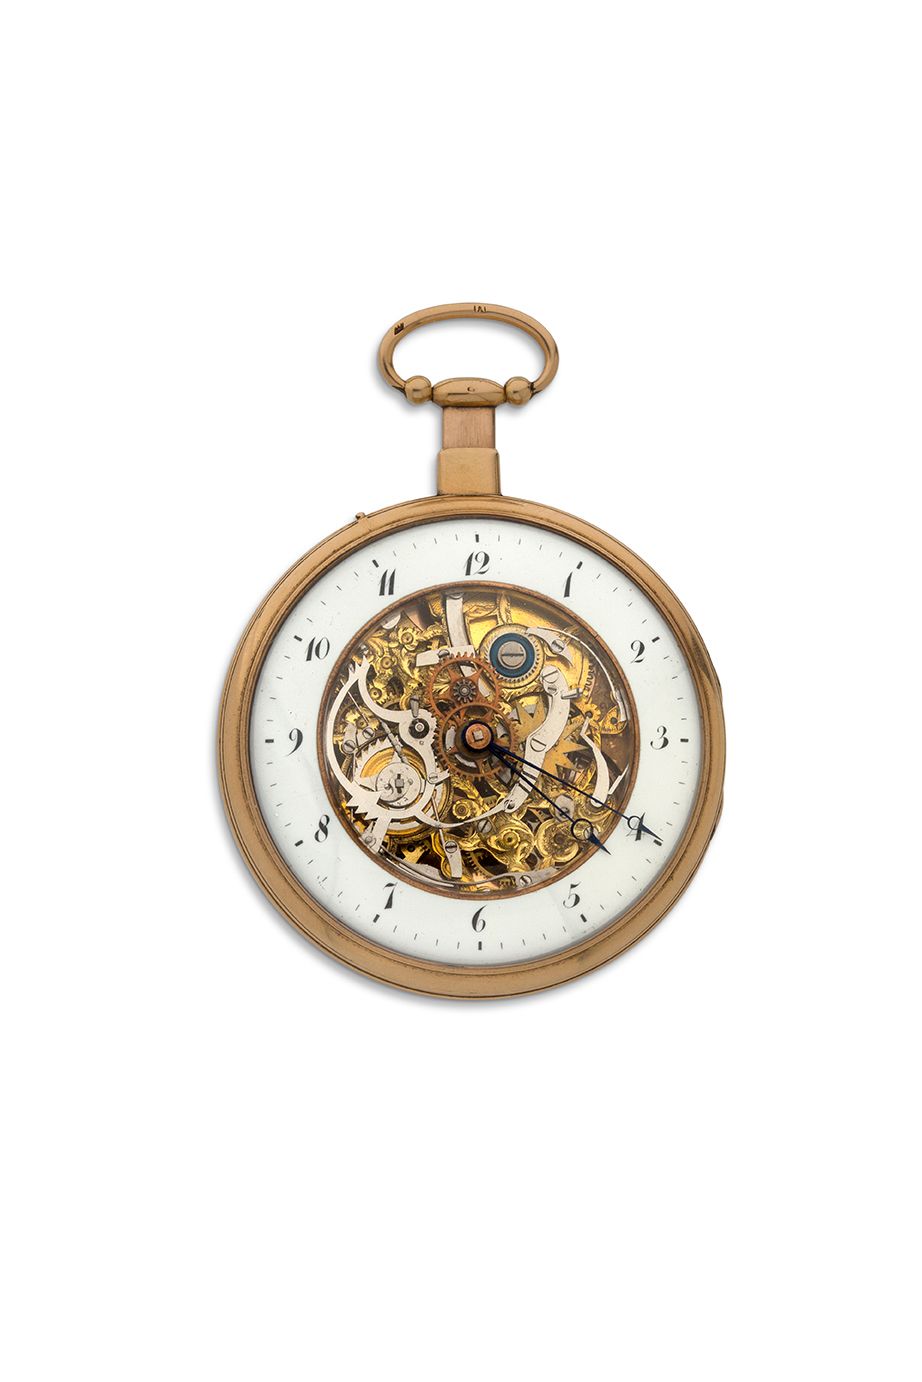 ANONYME 
Reloj esqueleto de oro con mecanismo de sondeo



Caja con bisagras, la&hellip;